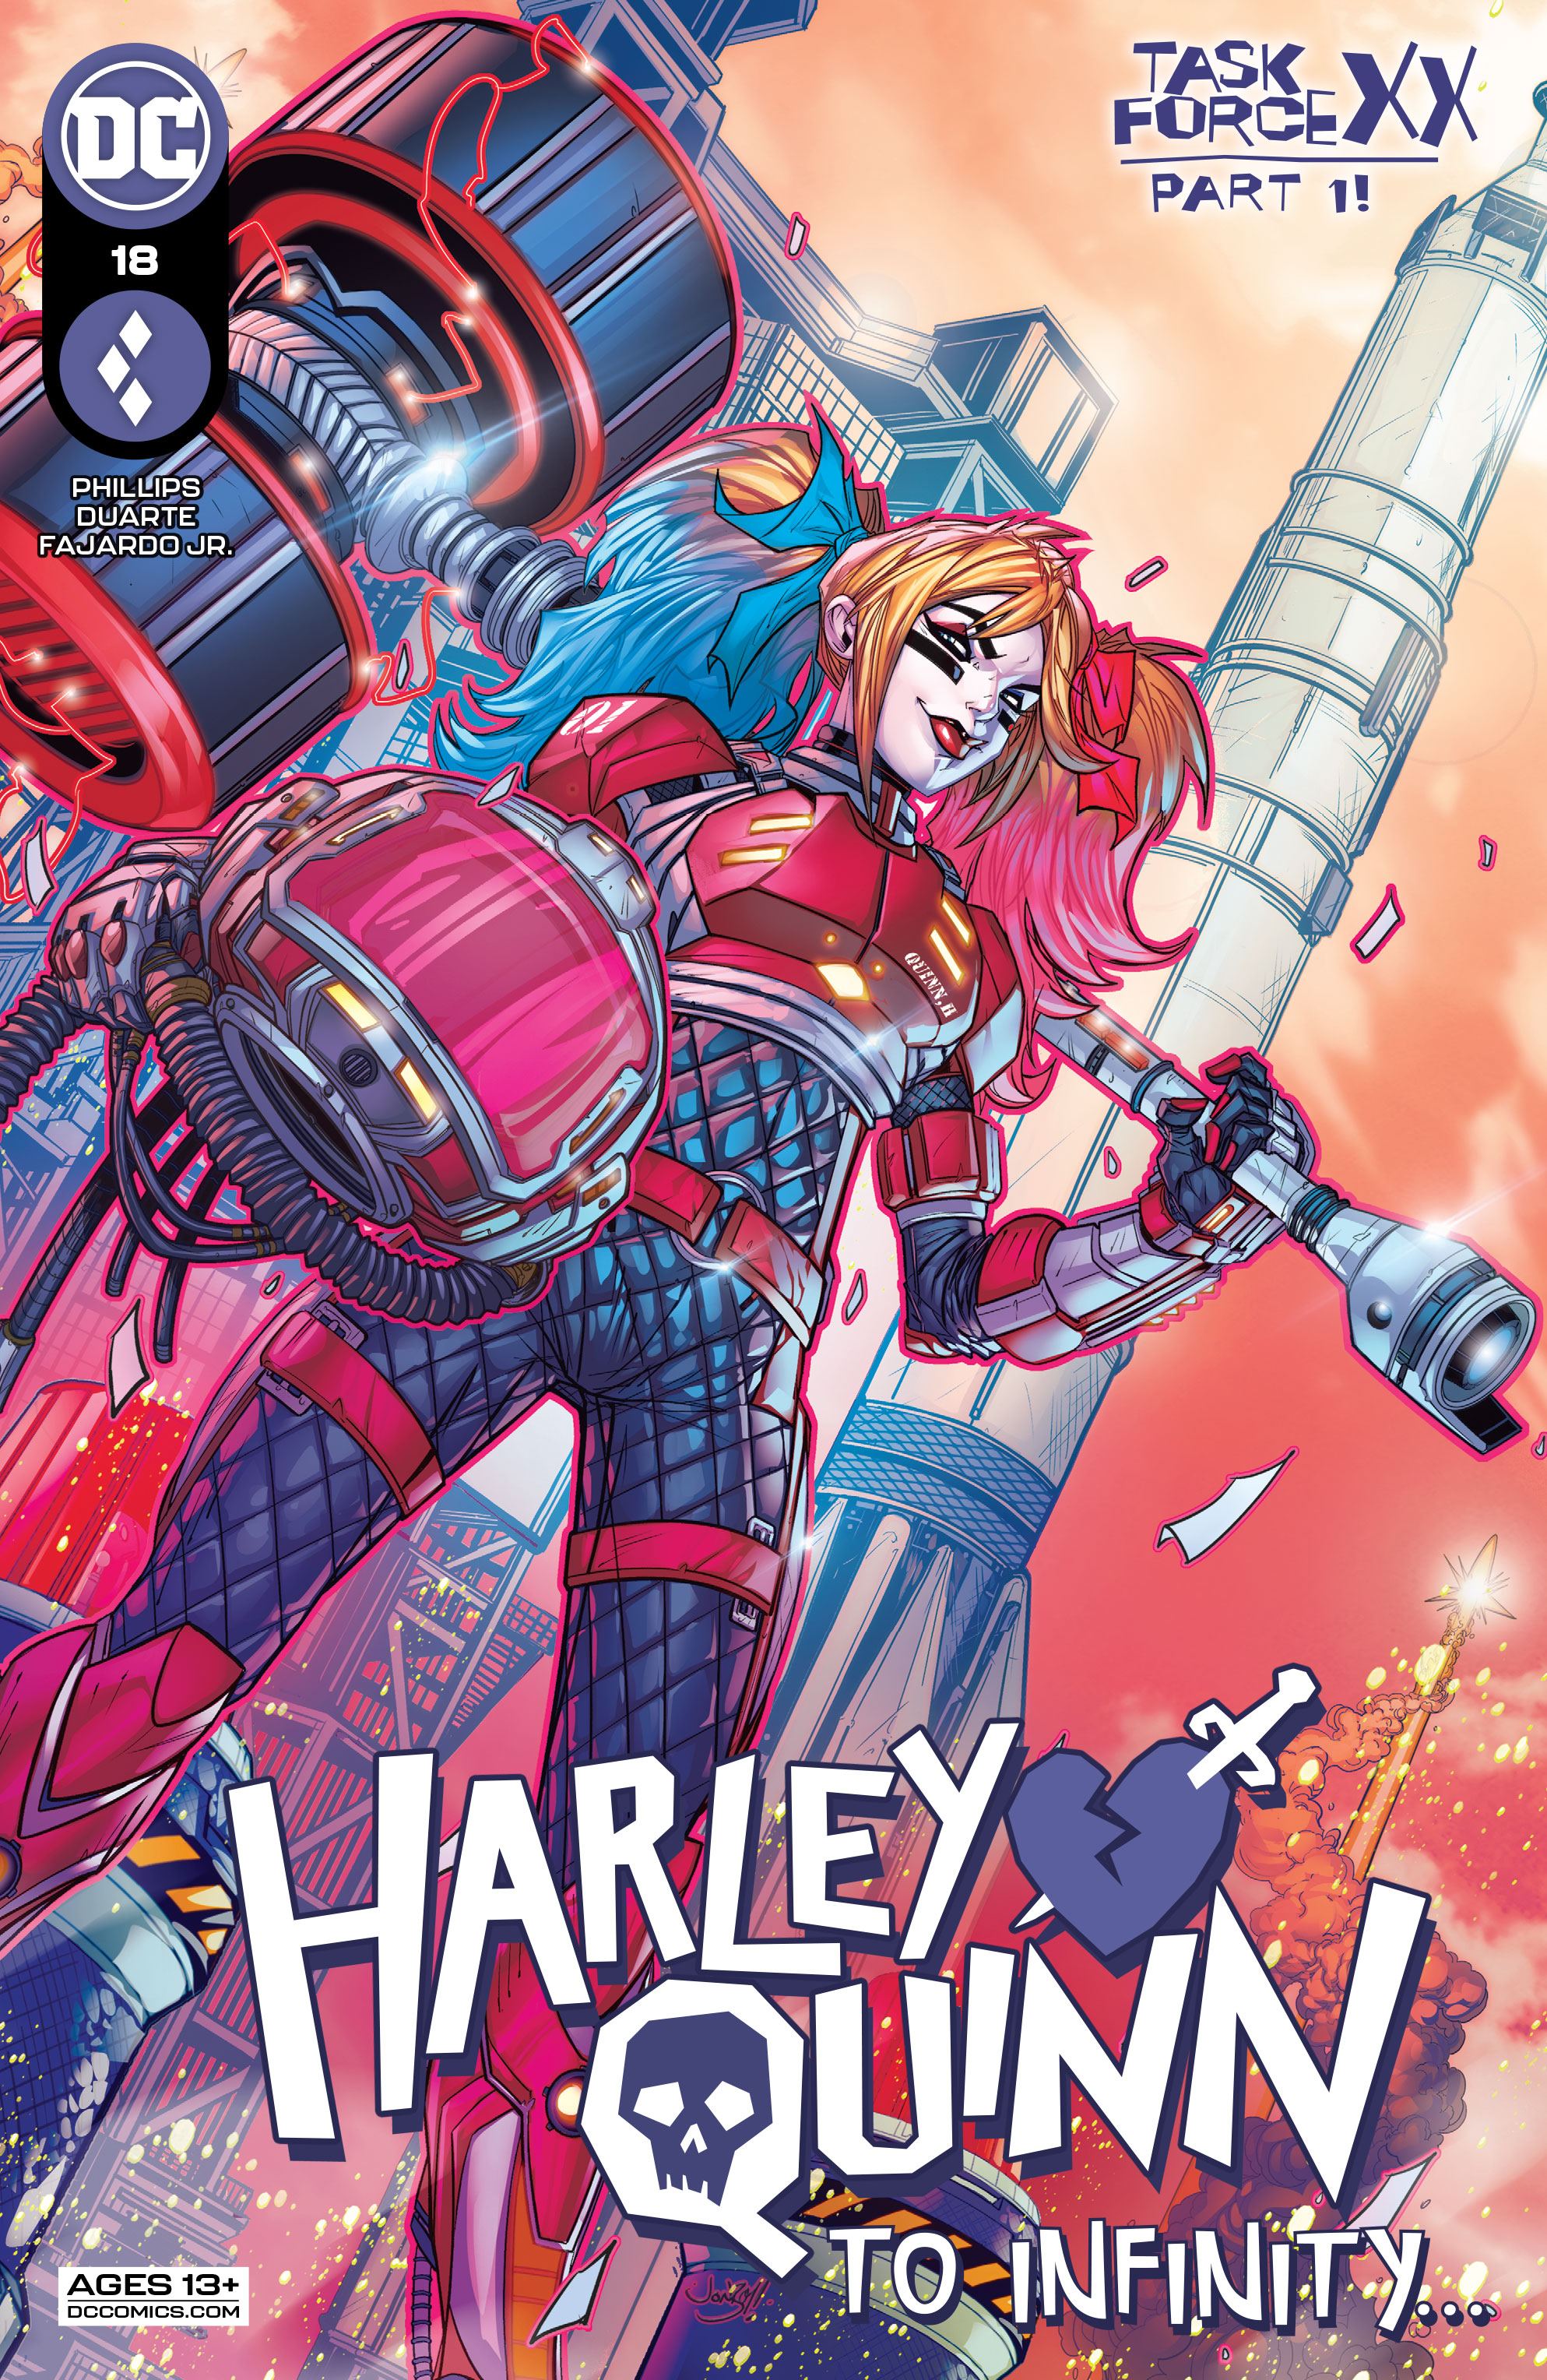 Harleys face turn